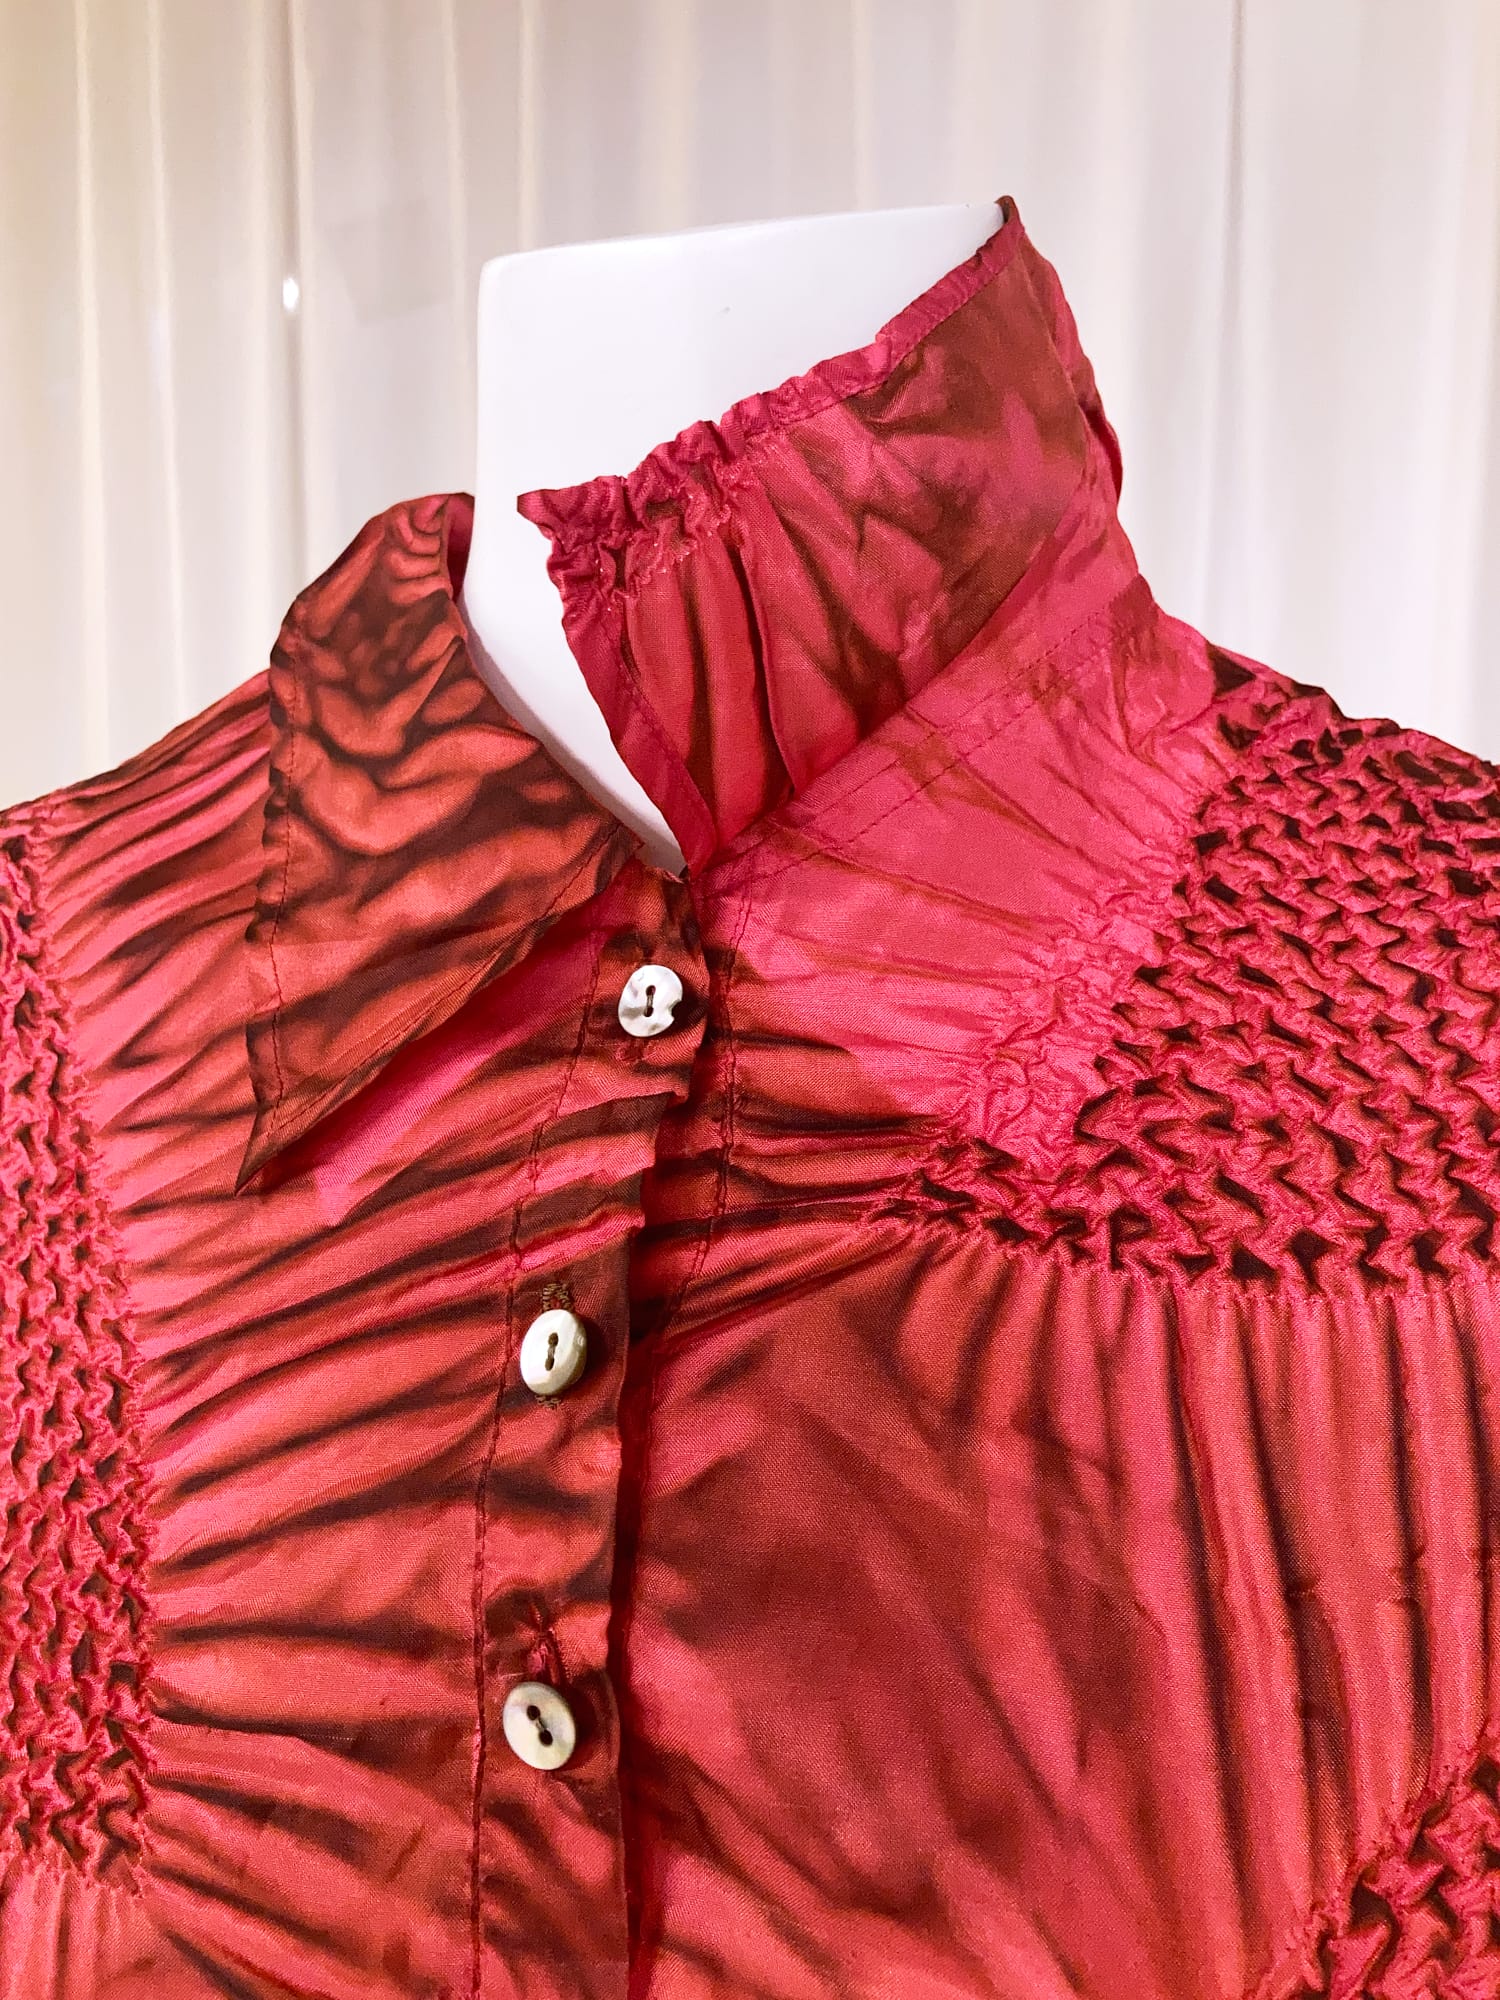 Yoshiki Hishinuma 1990s red and pink creased polyester leaf pattern dress